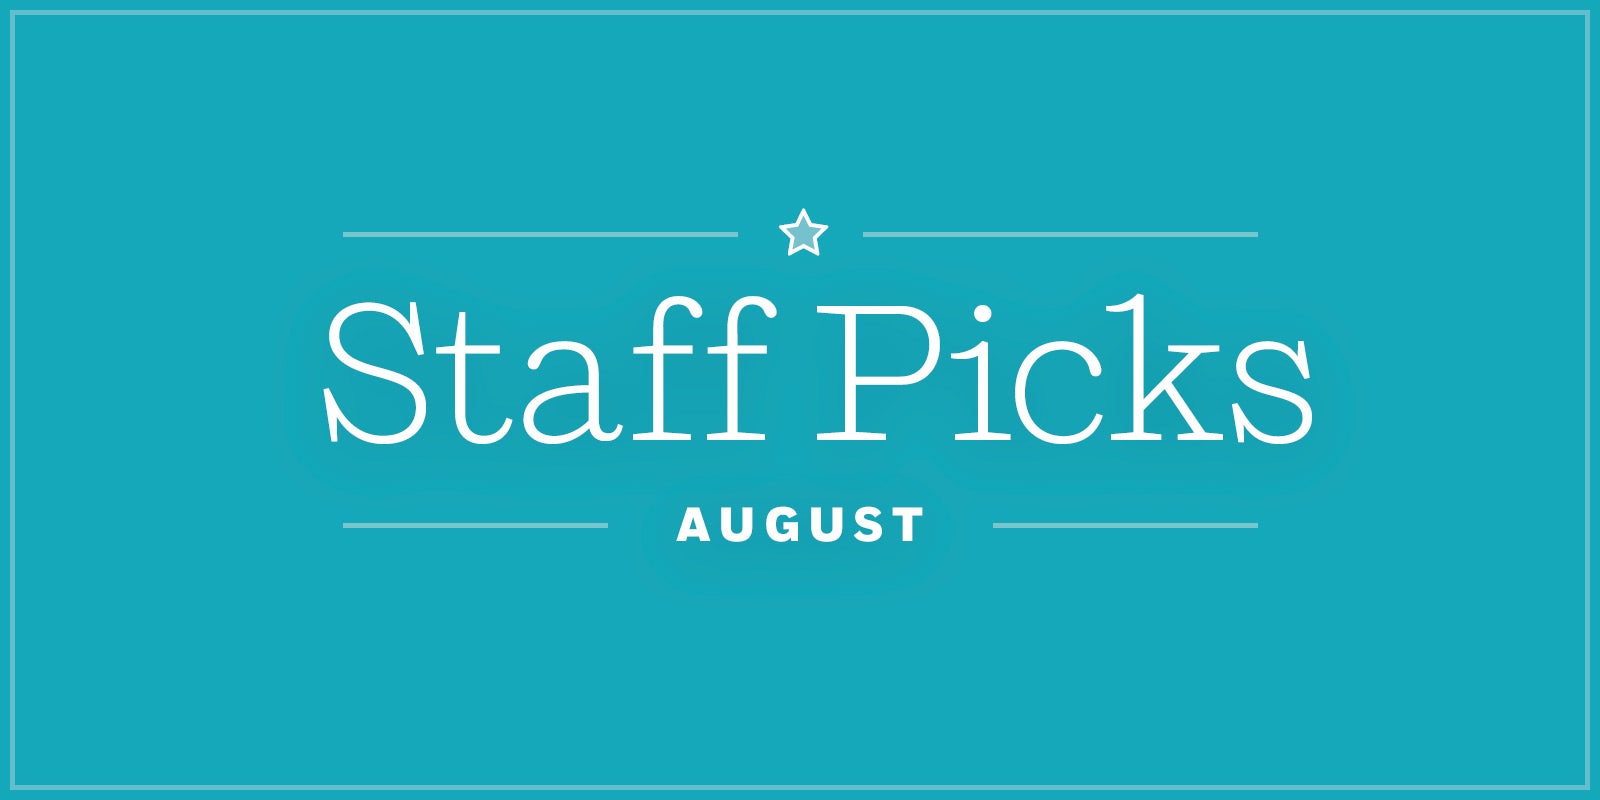 *August Staff Picks*